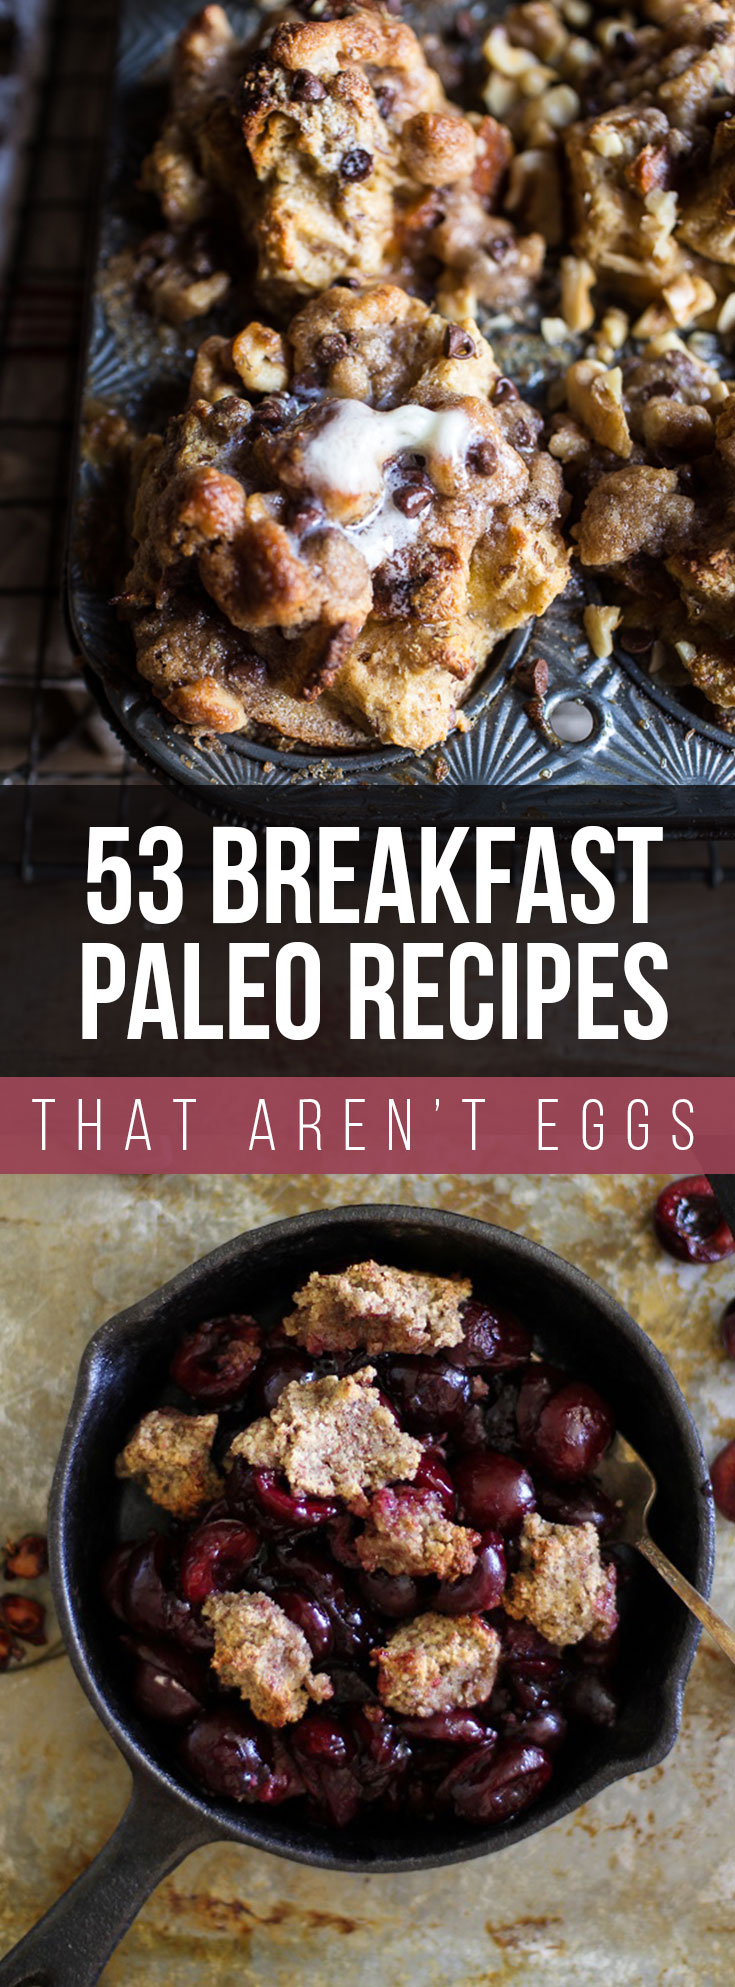 53 Paleo Breakfasts That Aren't Eggs - Amazing Paleo ...